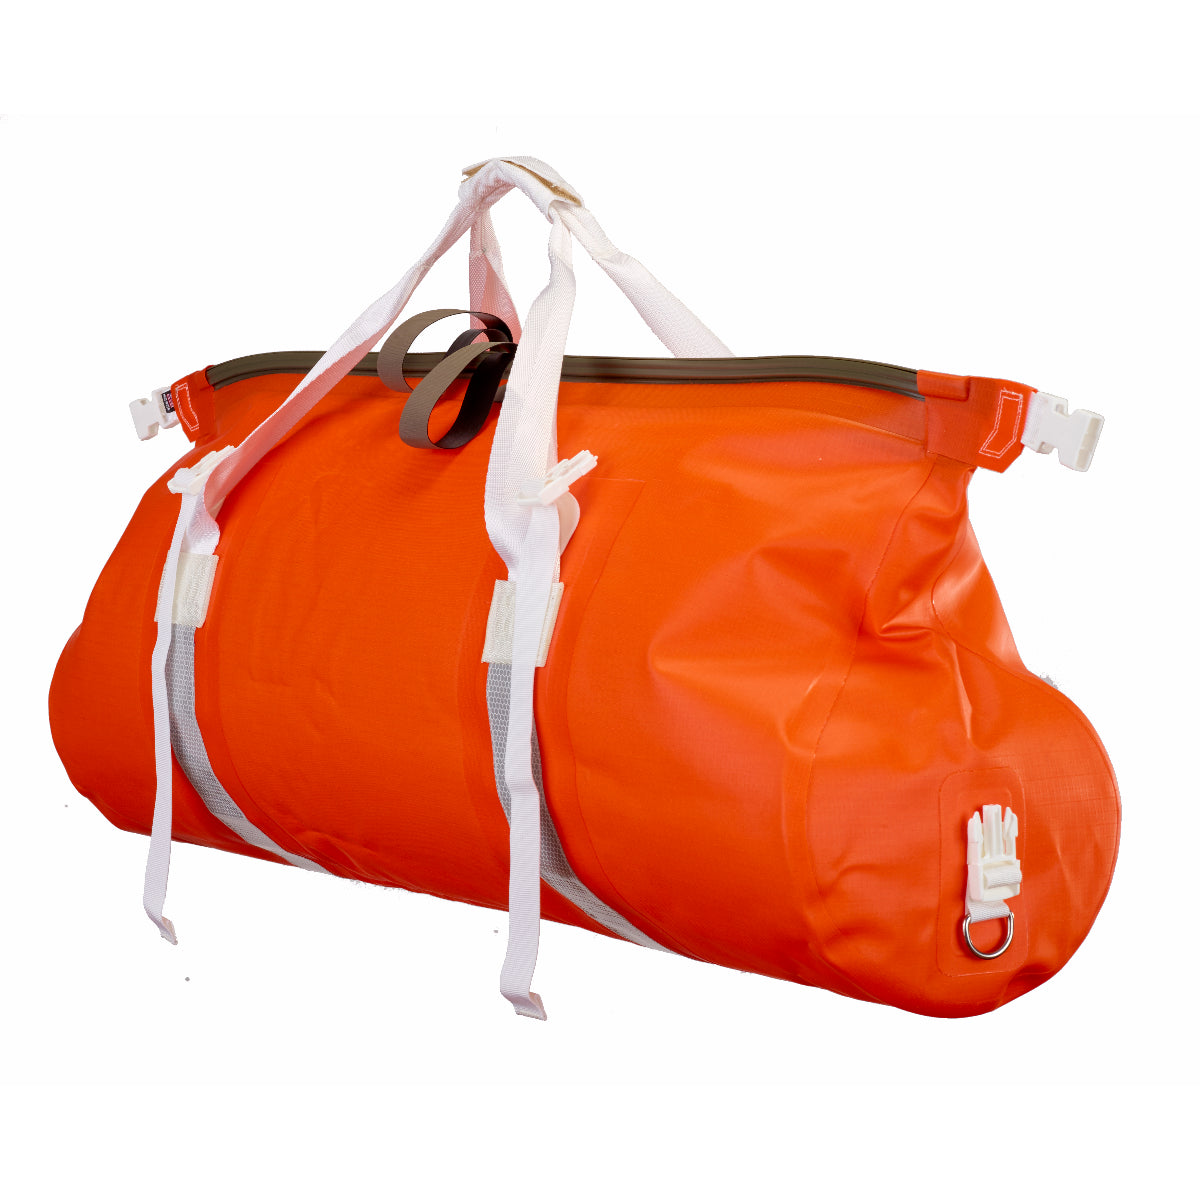 Watershed Survival Equipment Bag, LG